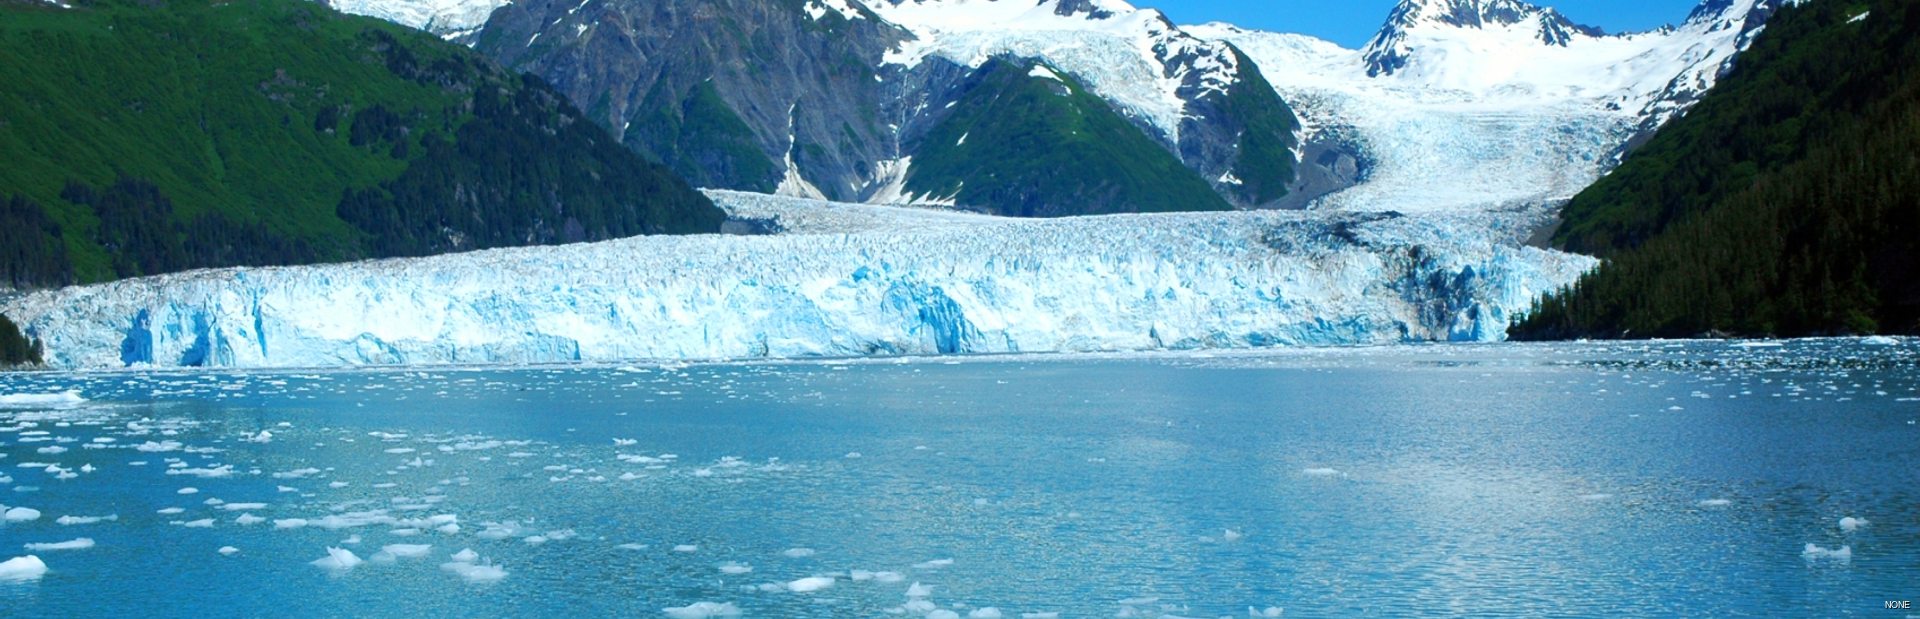 Alaska climate photo